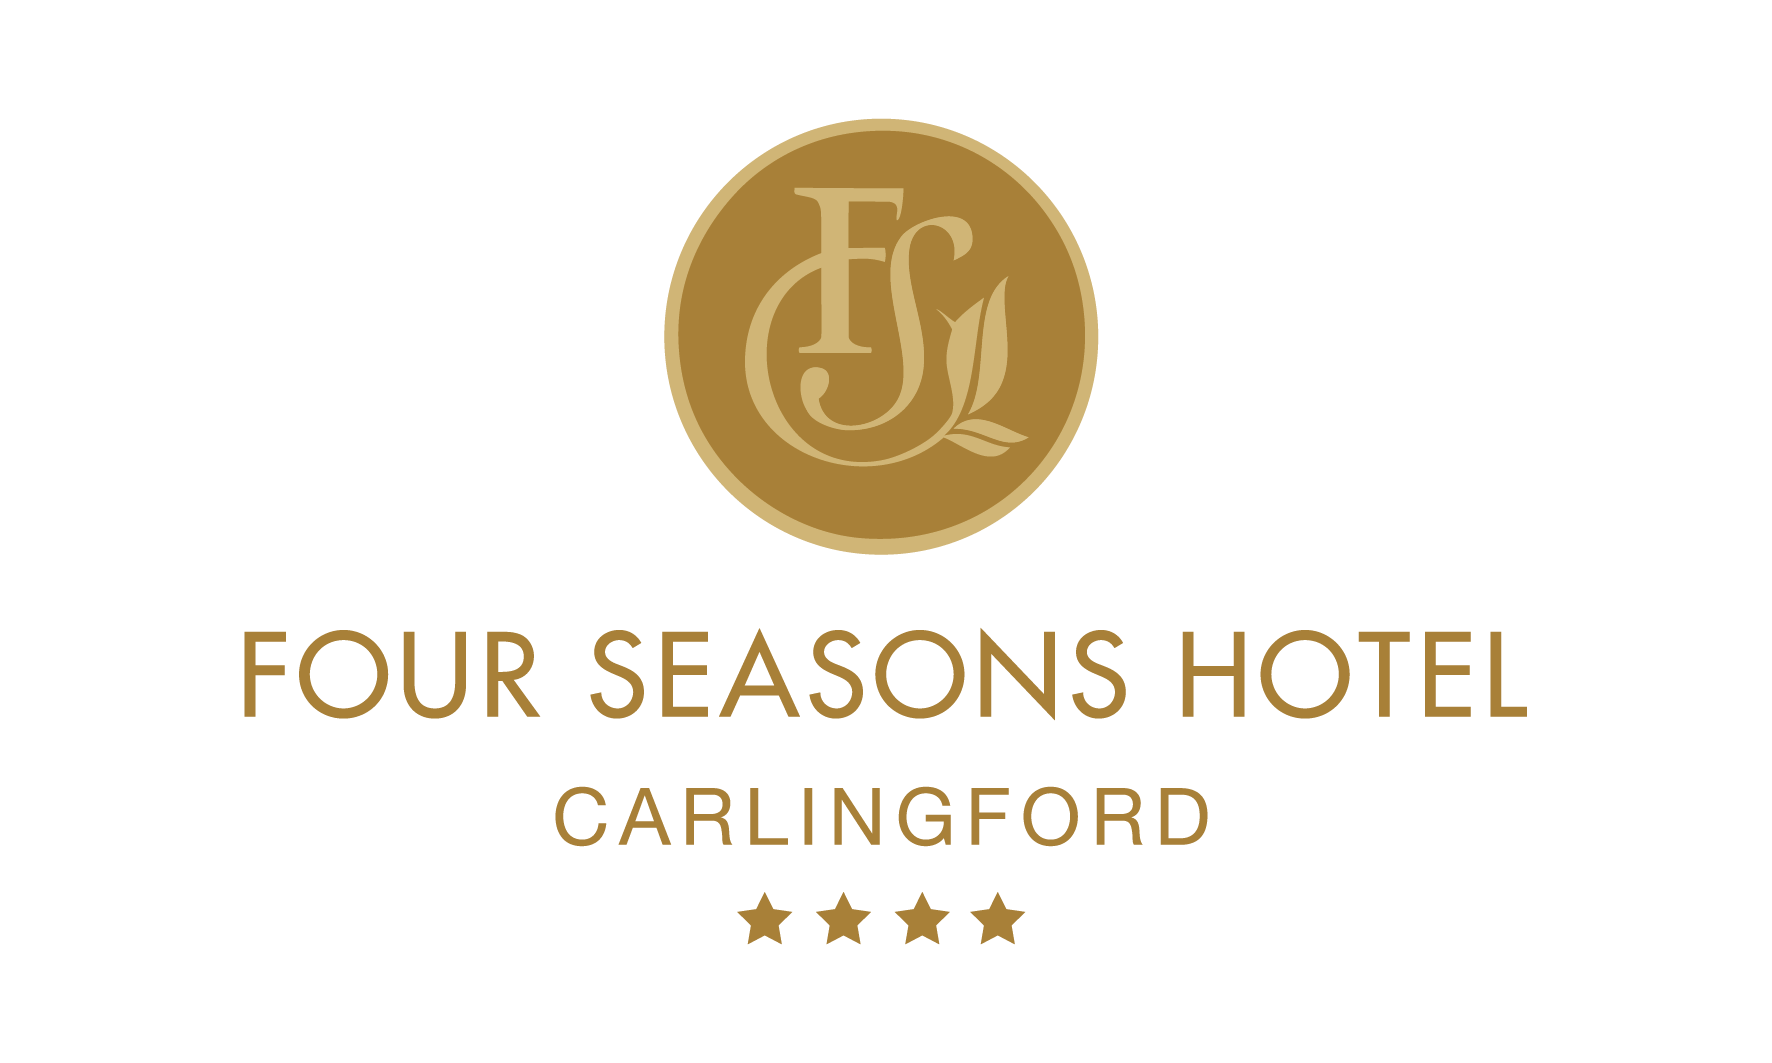 Four Seasons Hotel Carlingford